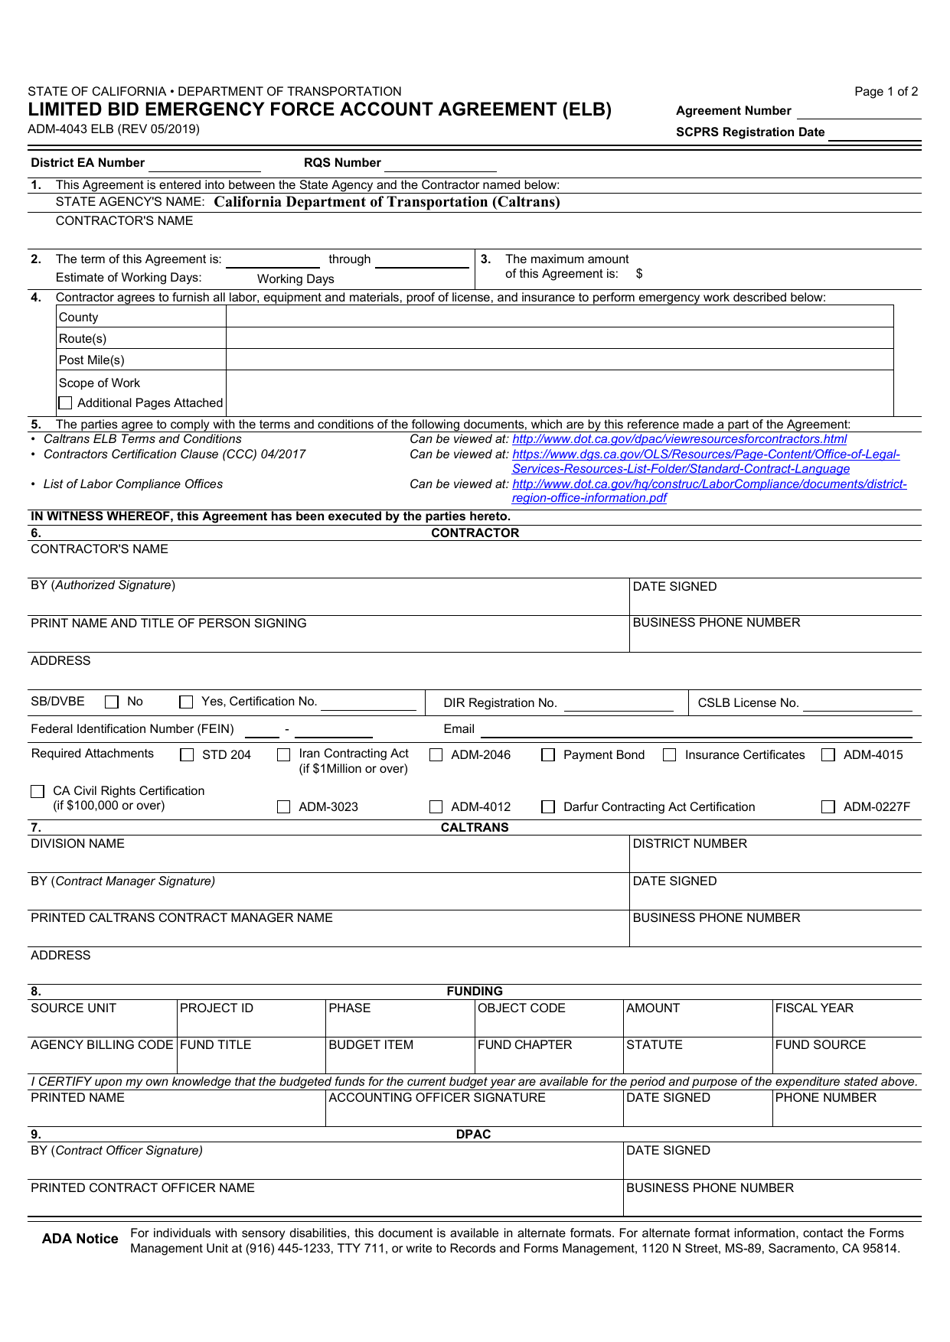 Form ADM-4043 ELB Limited Bid Emergency Force Account Agreement (Elb) - California, Page 1